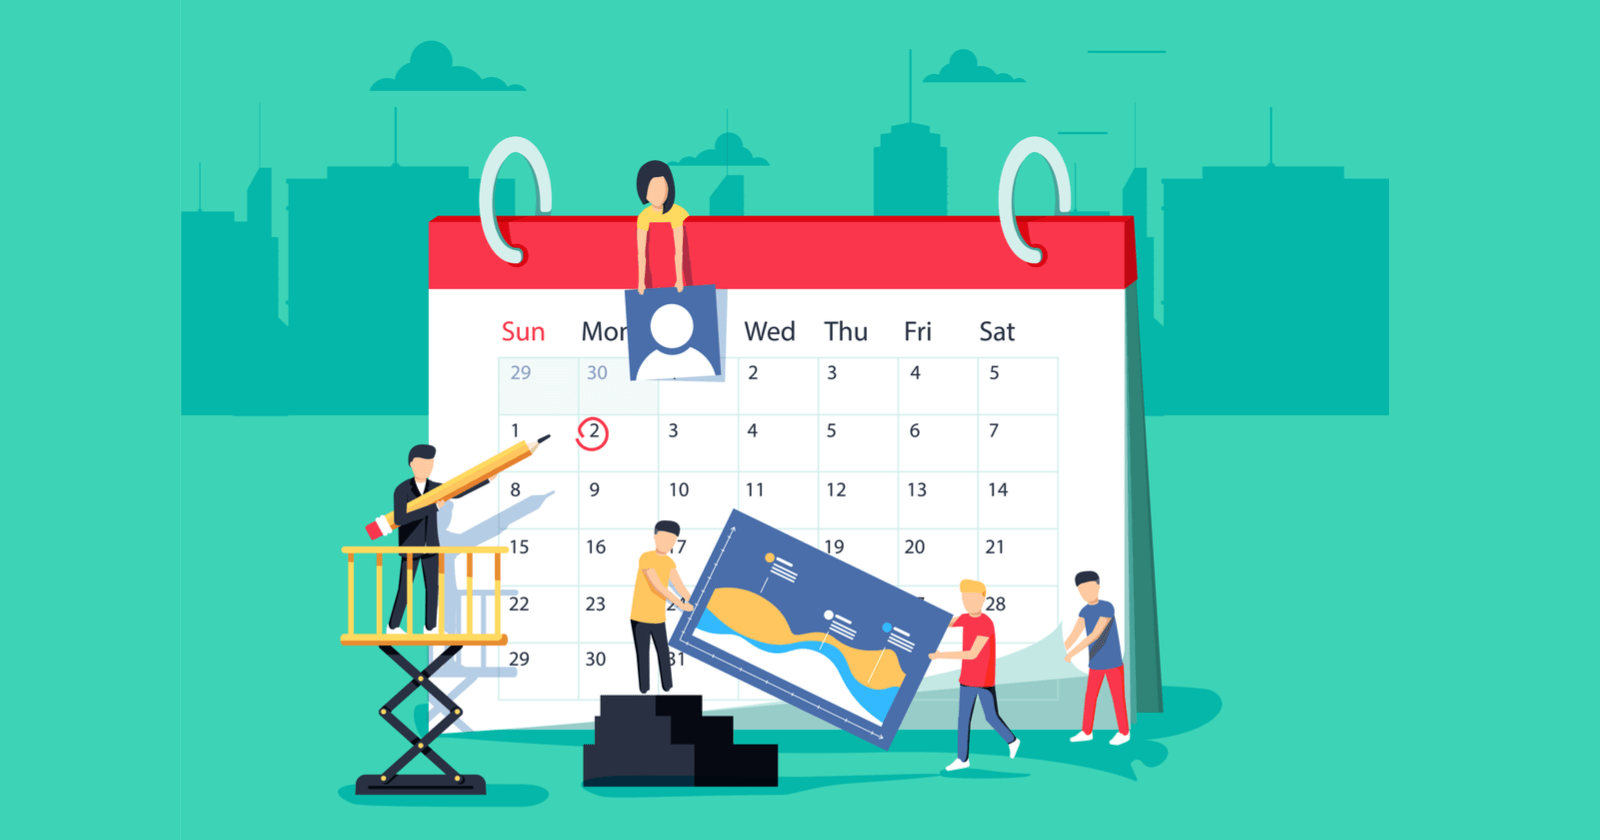 How to Create Your Editorial Calendar for Social Media تقویم محتوا (Content Calendar)؛ برای ساخت یک تقویم خوب، آستین بالا بزنید! فناوری